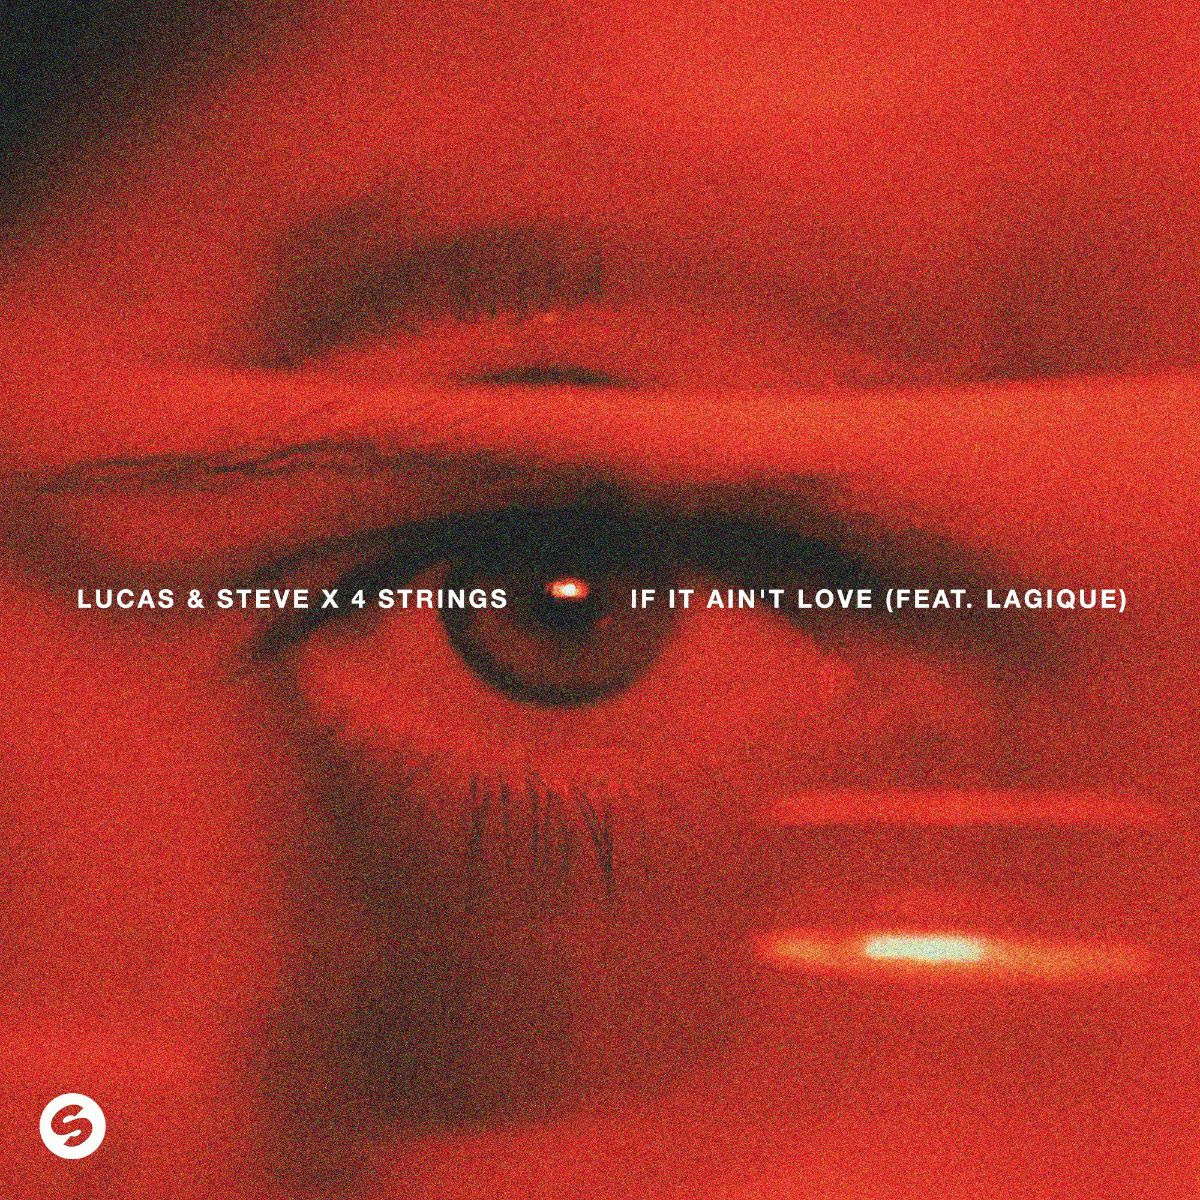 Lucas & Steve x 4 Strings revive trance classic into pop anthem, ‘If It Ain’t Love’ (feat. Lagique)